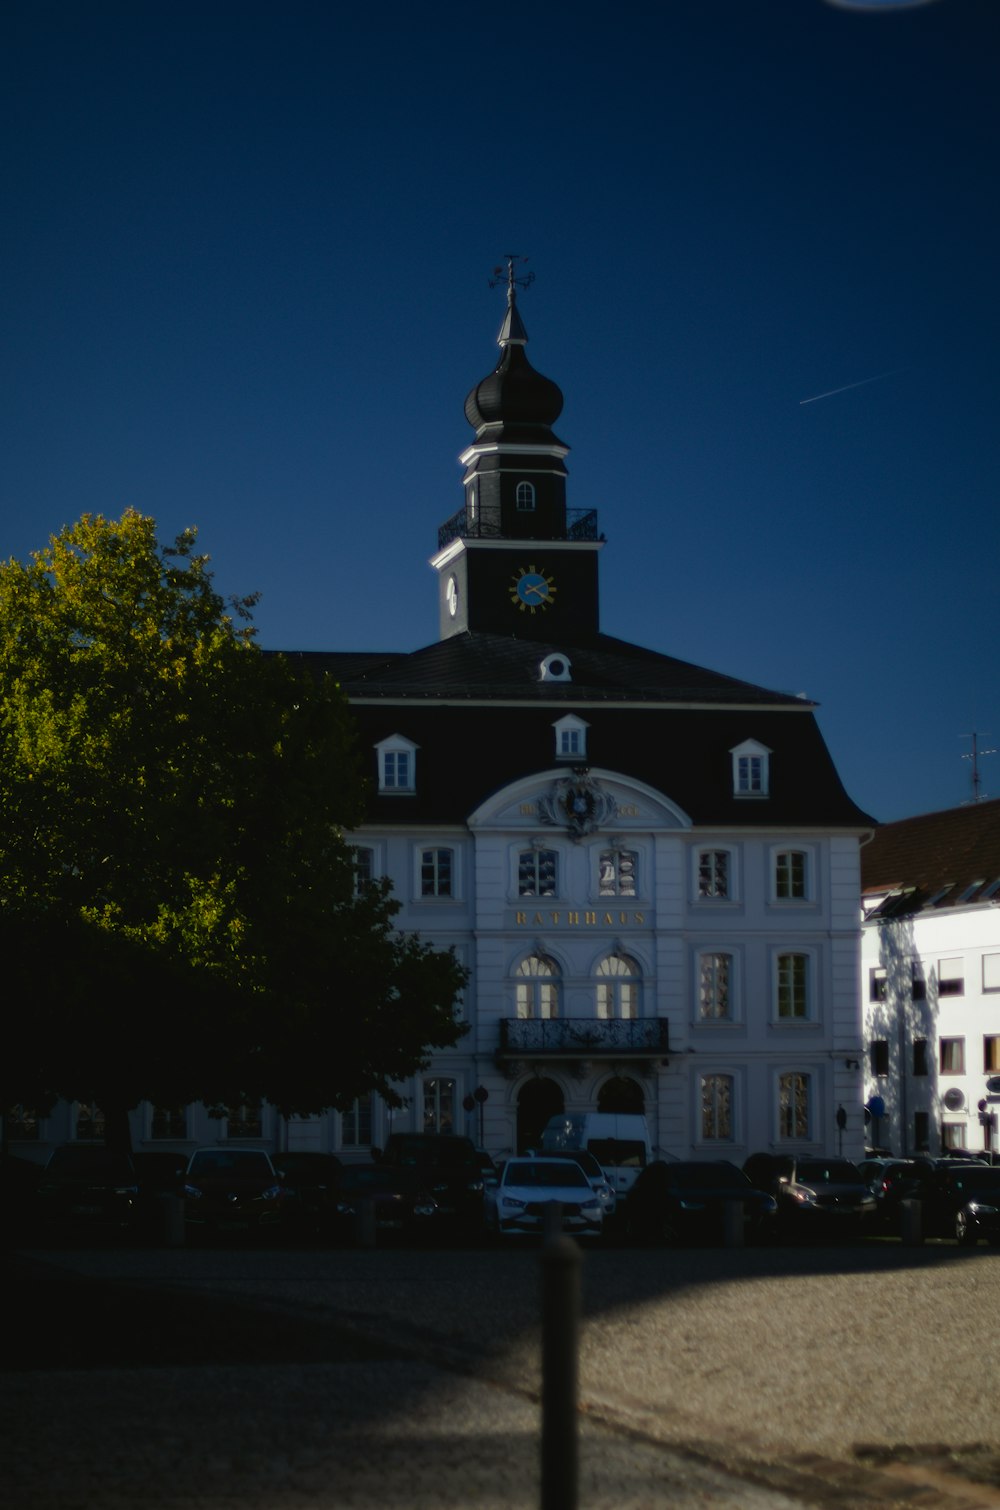 Un gran edificio blanco con una torre del reloj